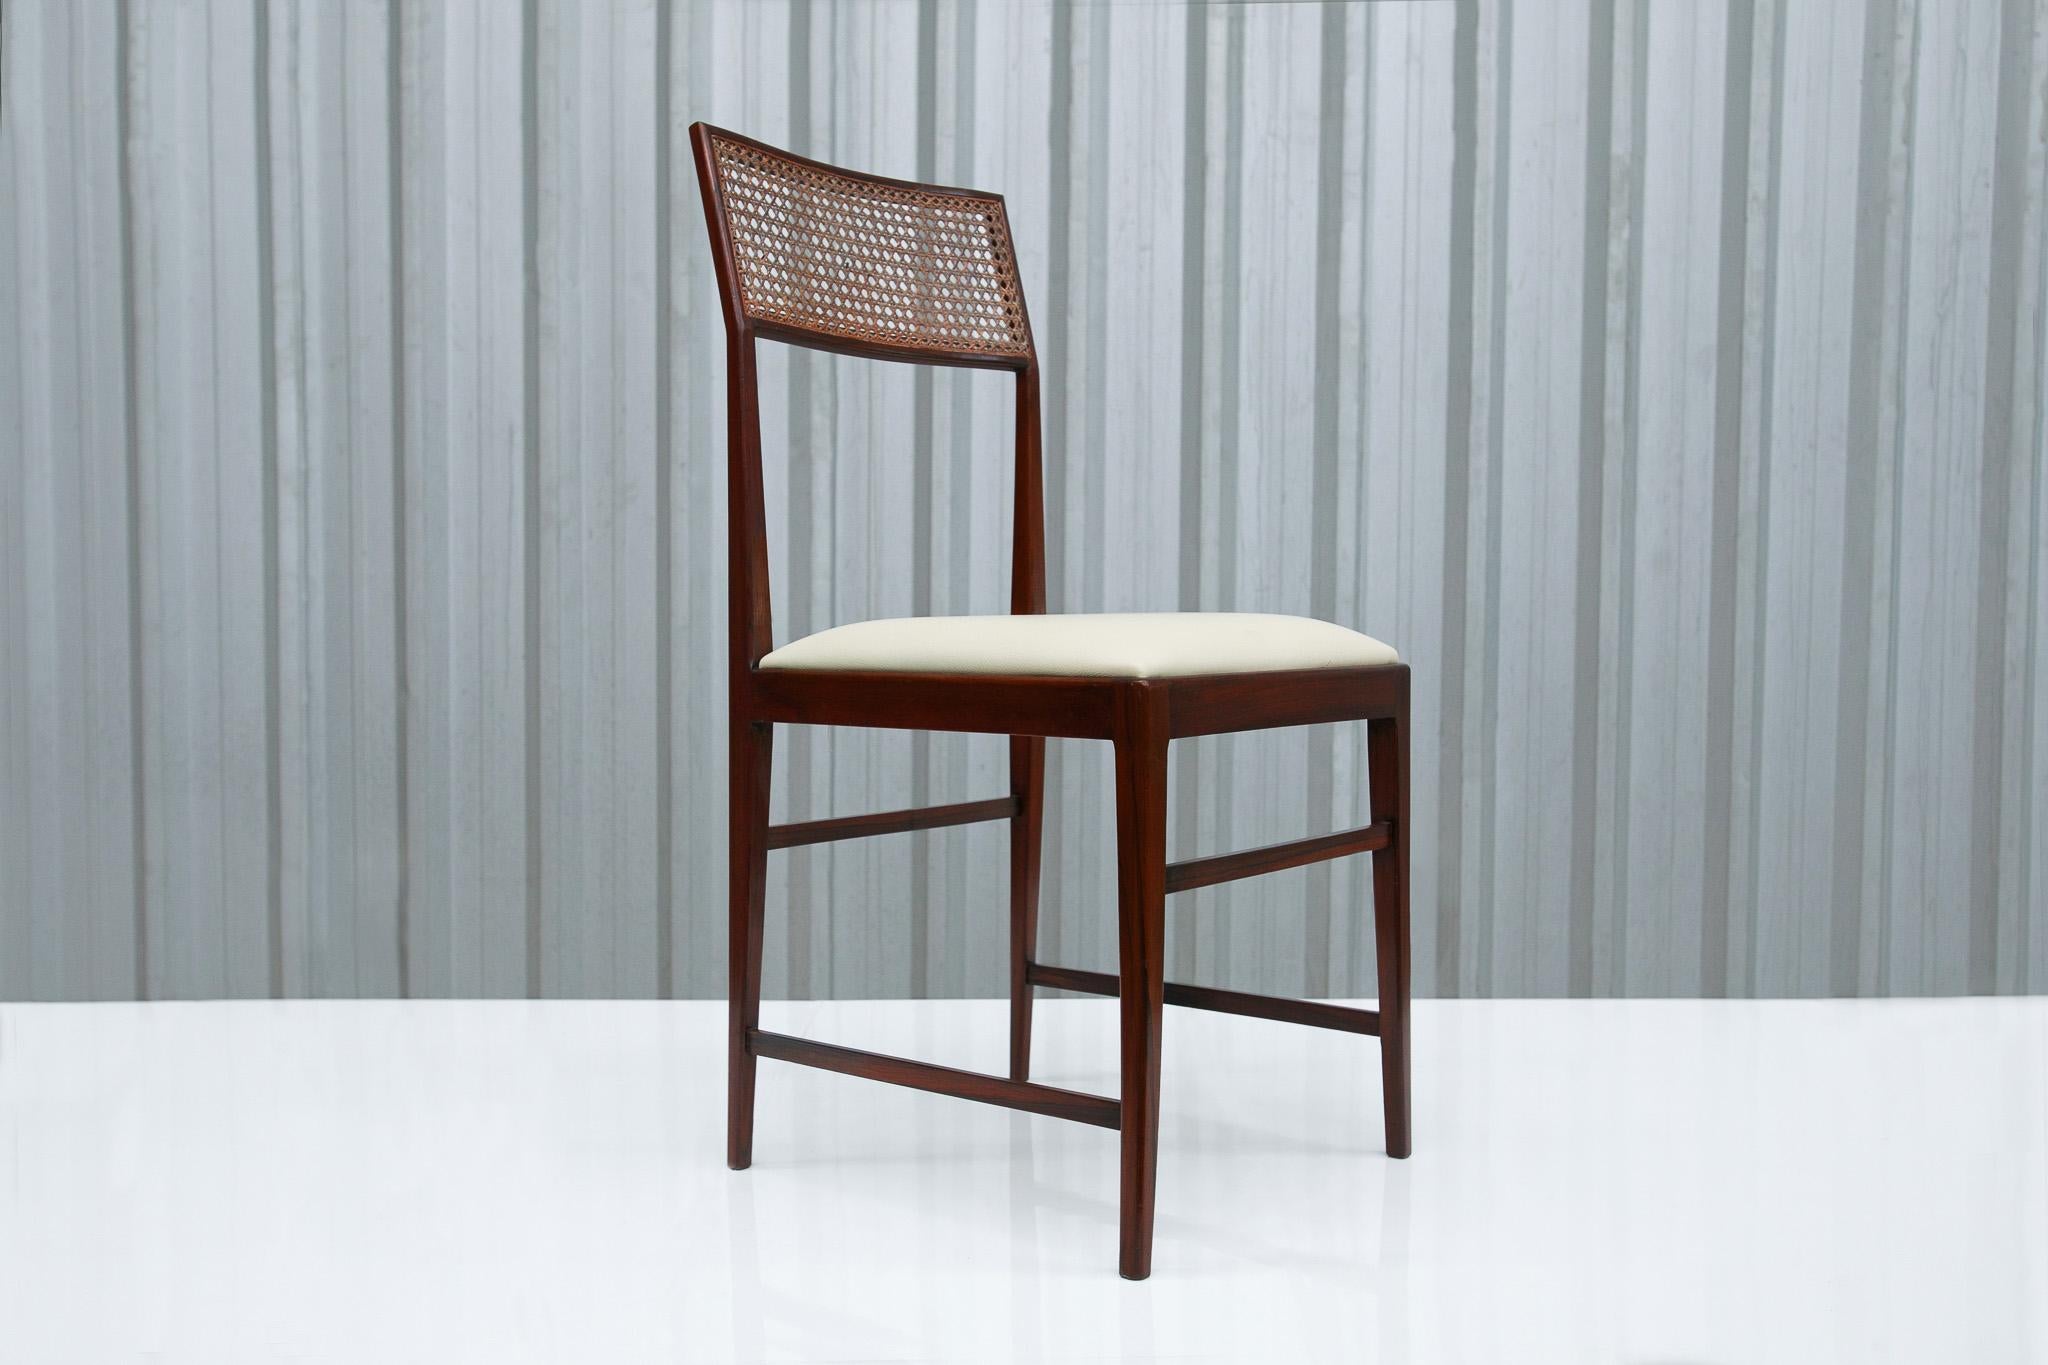 Brazilian Modern 4 Chair Set in Hardwood, Cane, Leather, Joaquim Tenreiro 1950s For Sale 4